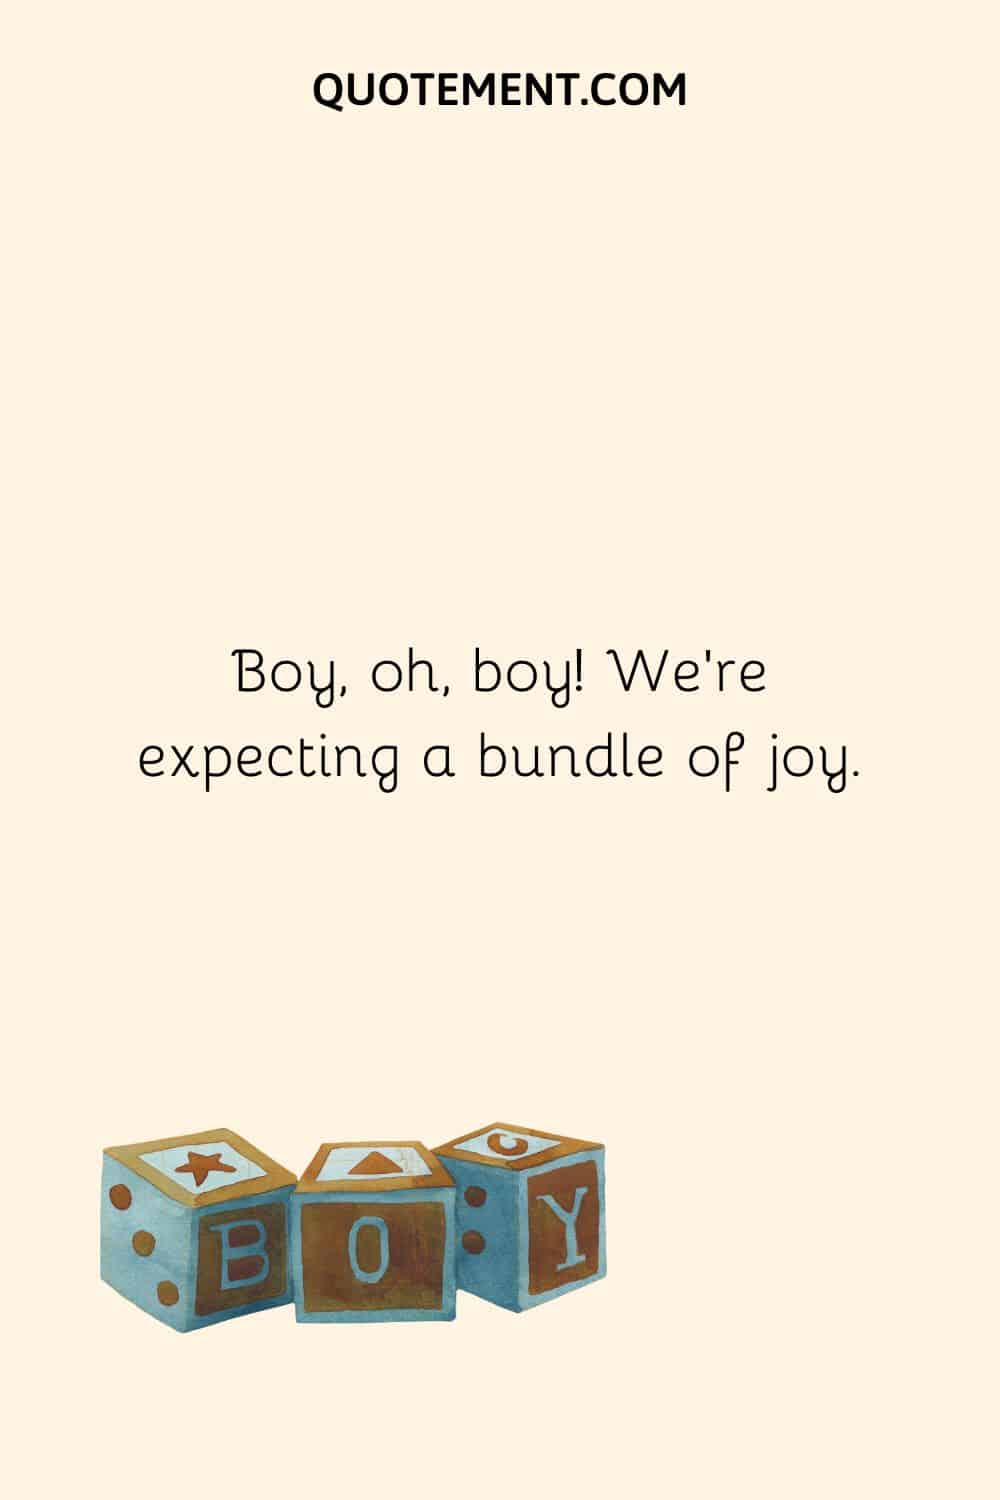 Boy, oh, boy! We’re expecting a bundle of joy.